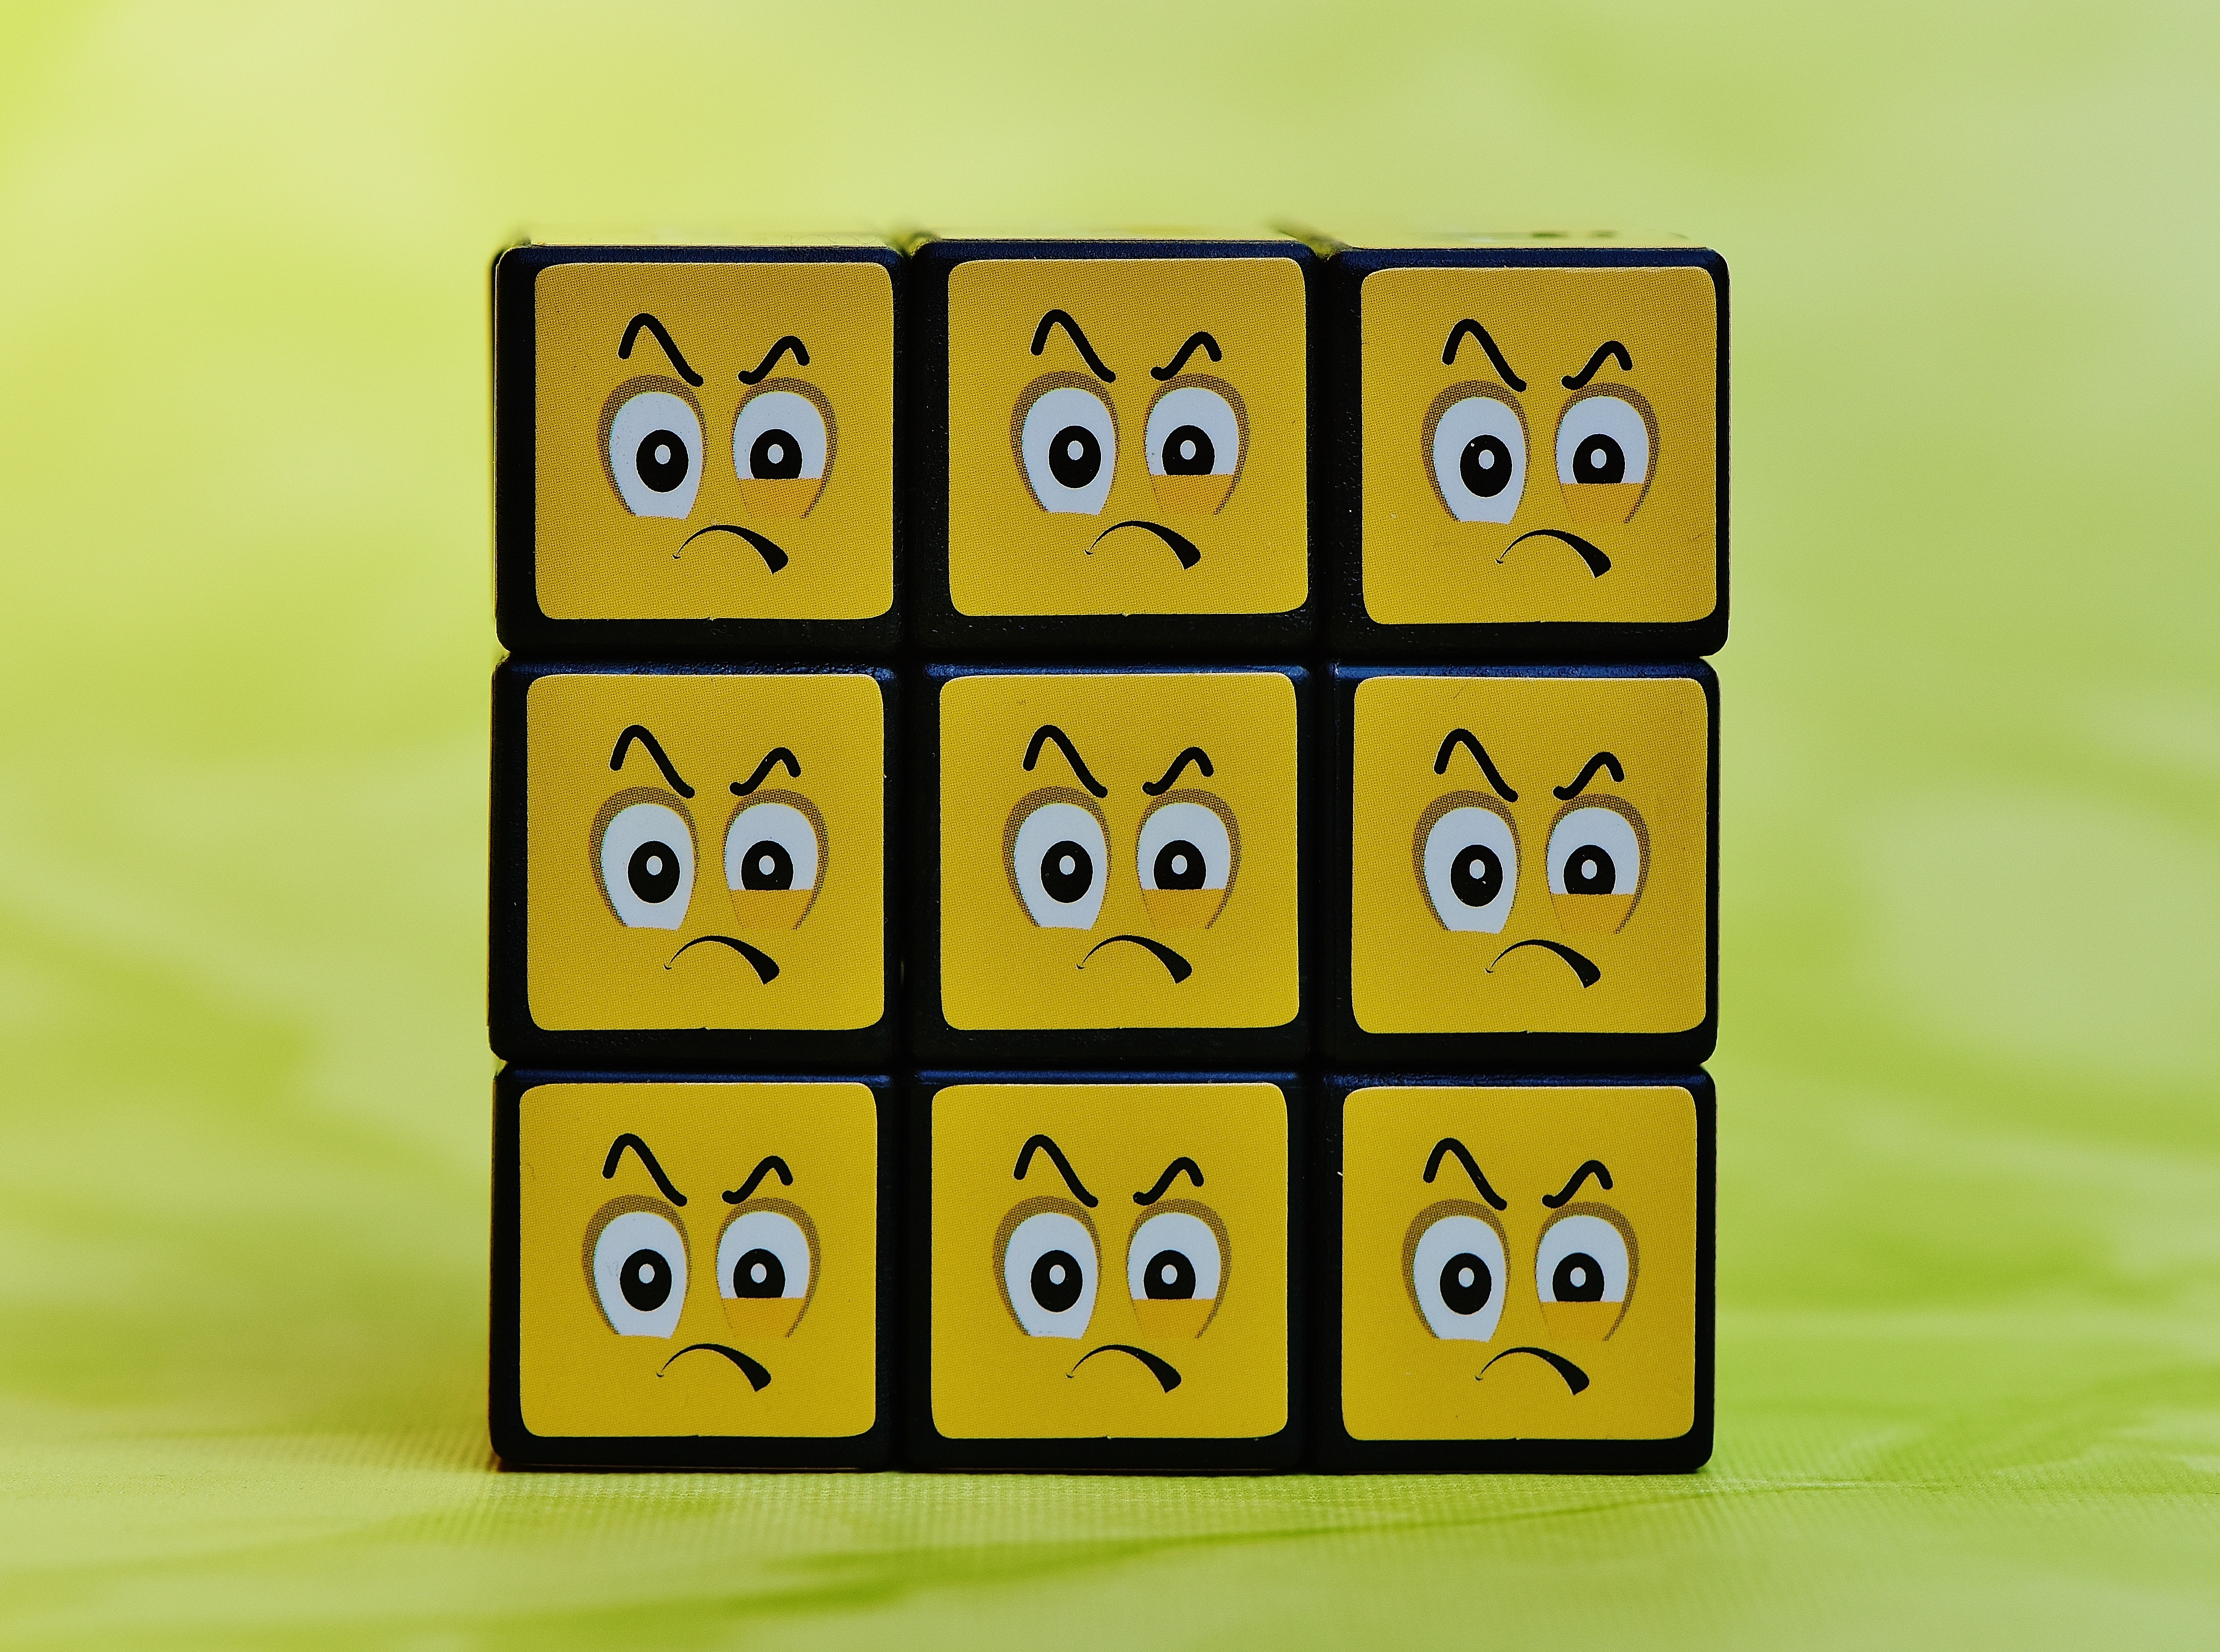 3x3 rubik's cube